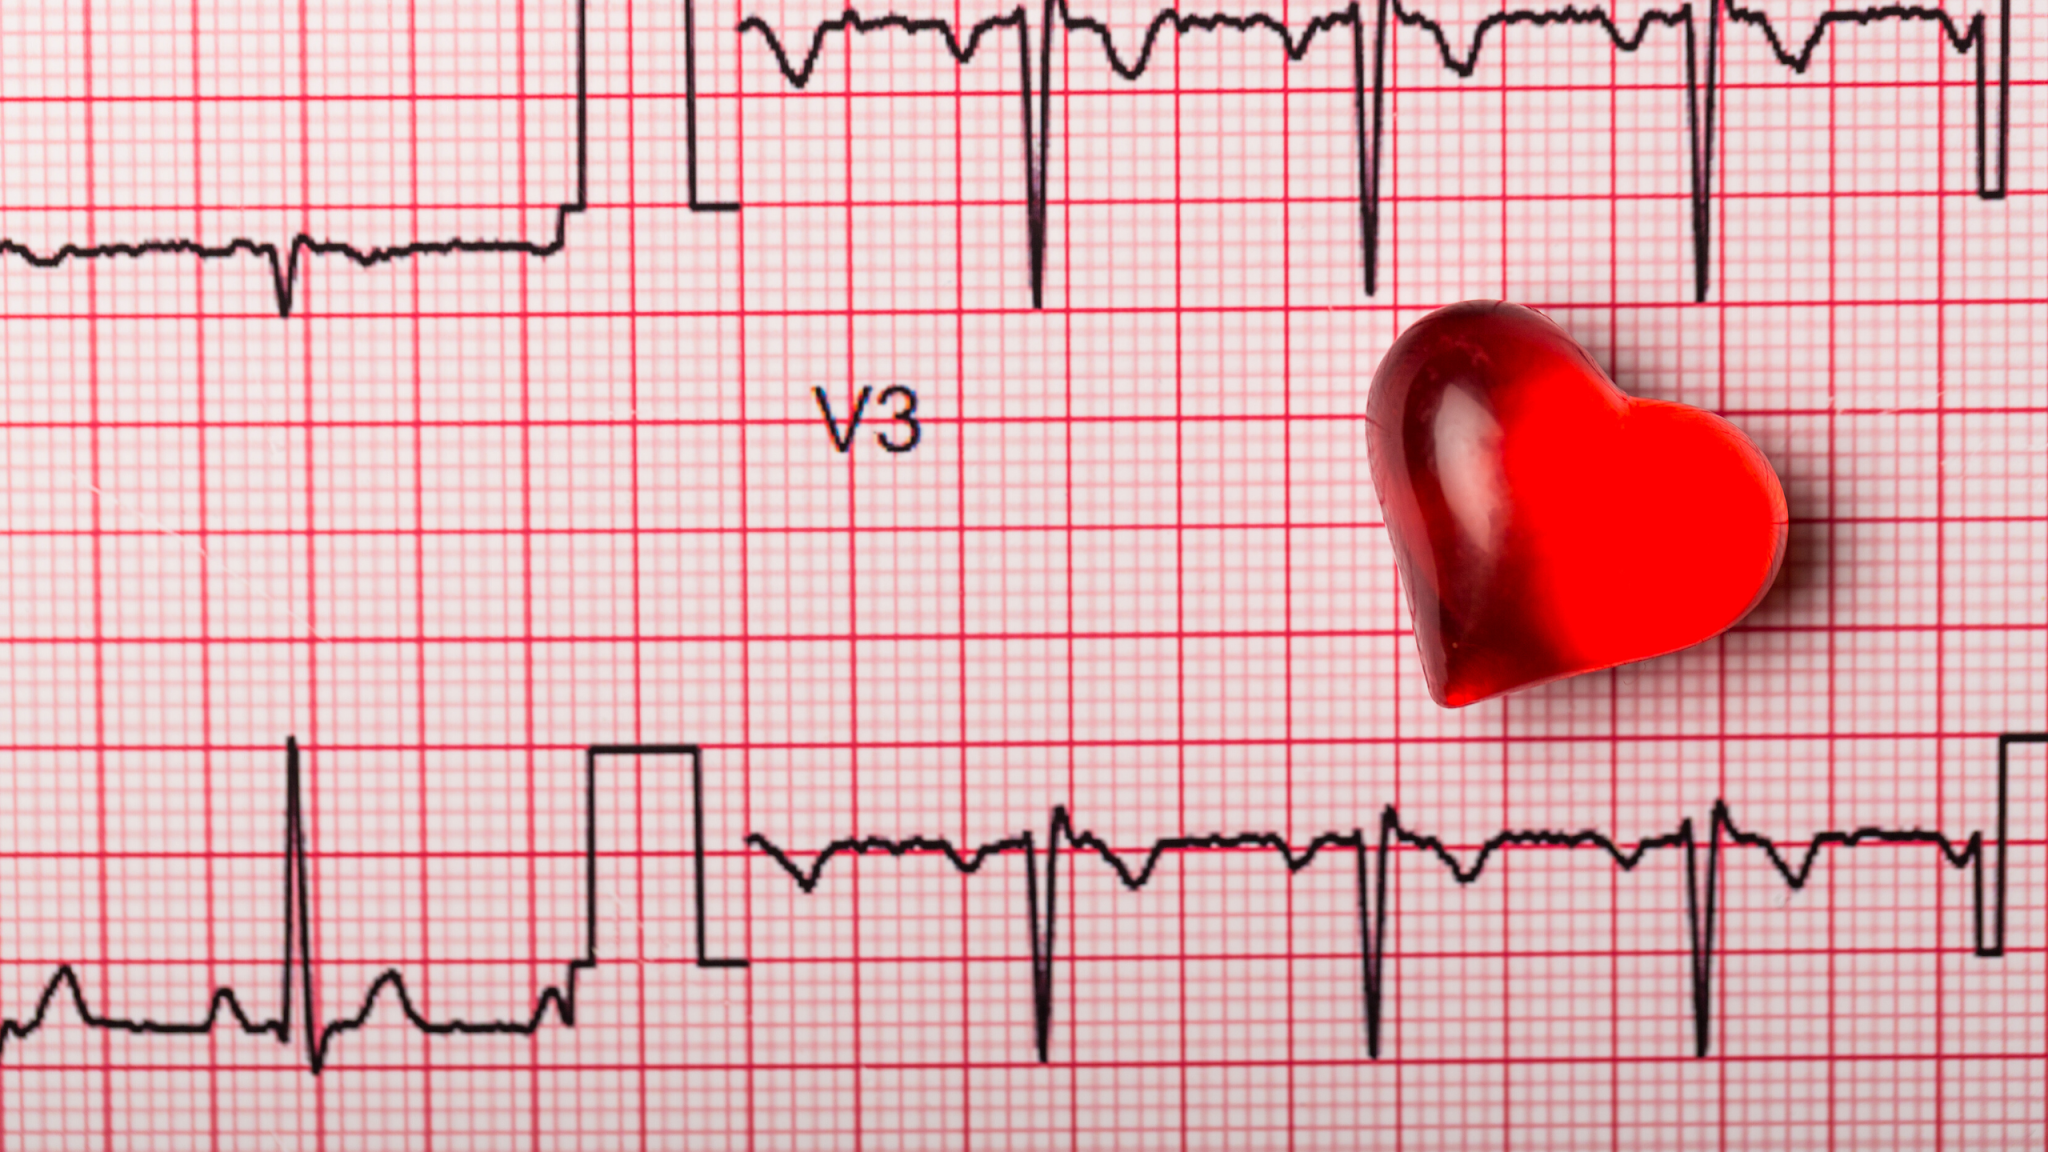 Экг сердца москва. ЭКГ картинки. ЭКГ рисунок. Кардиограмма сердца фото. Сердце с кардиограммой картинки.